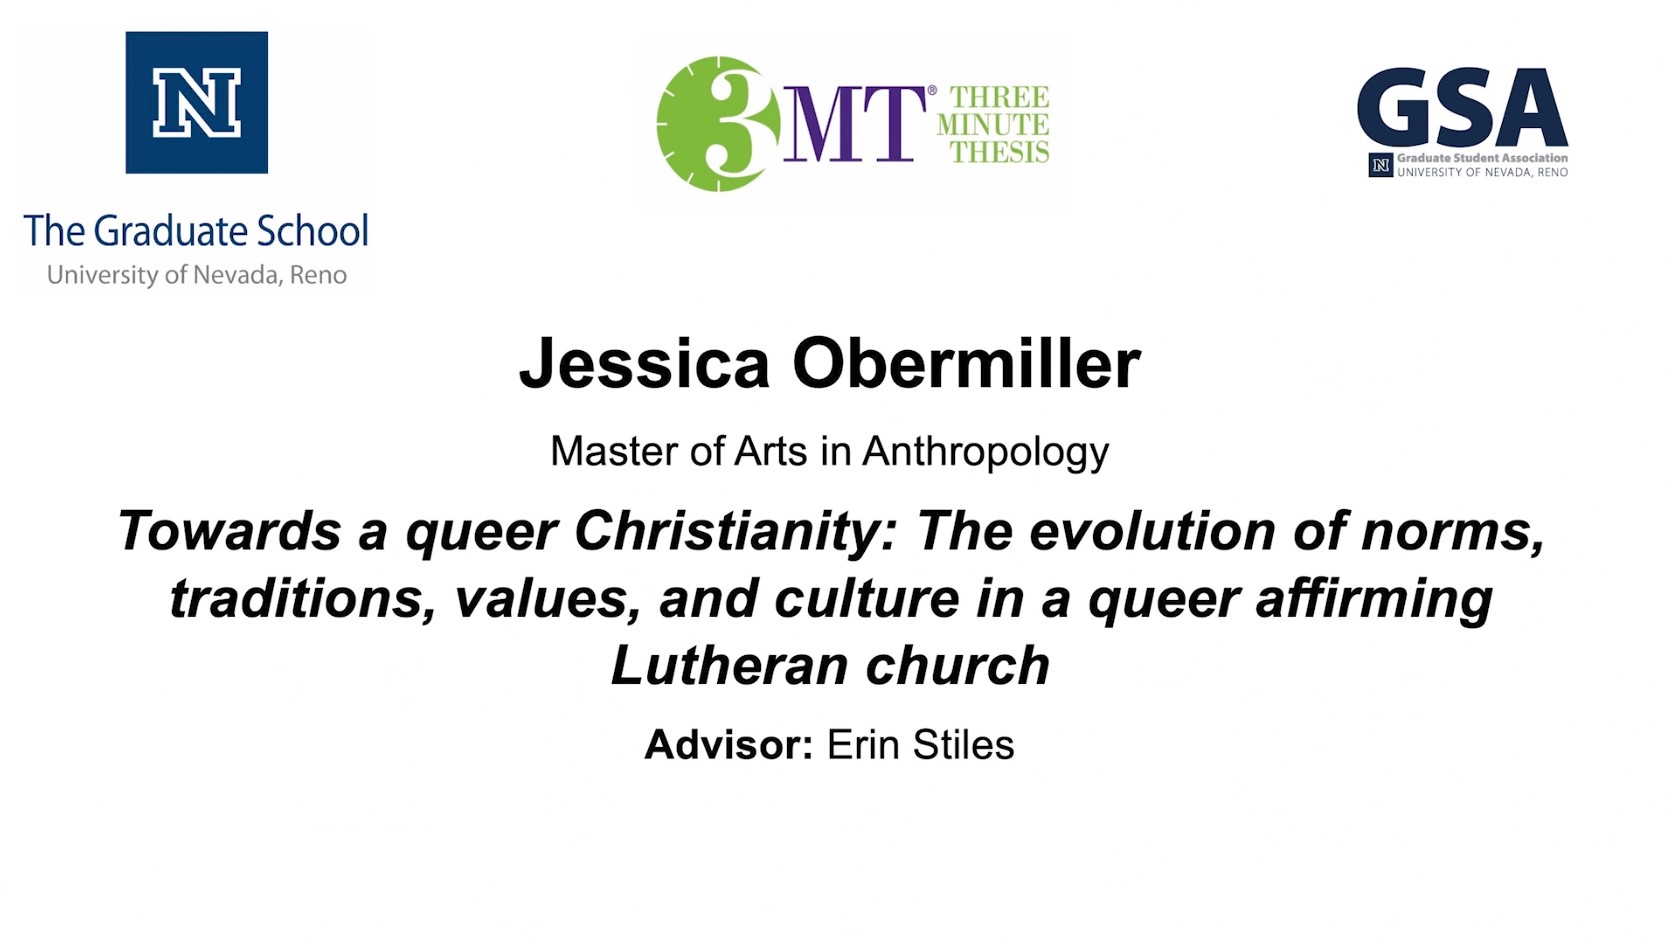 Thumbnail of Jessica Obermiller's title slide